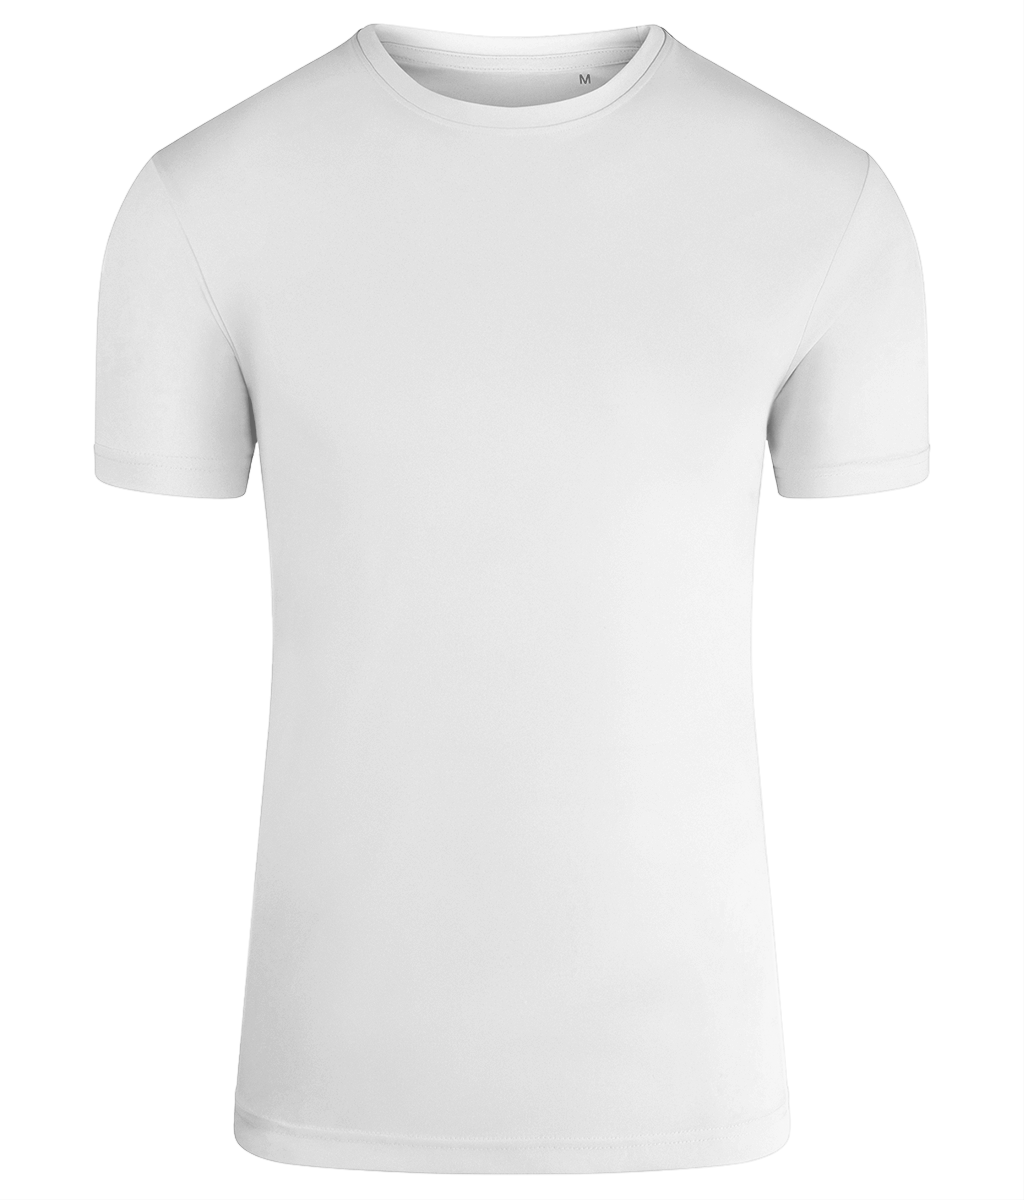 SNOWCAT Recycled Performance T-shirt Unisex